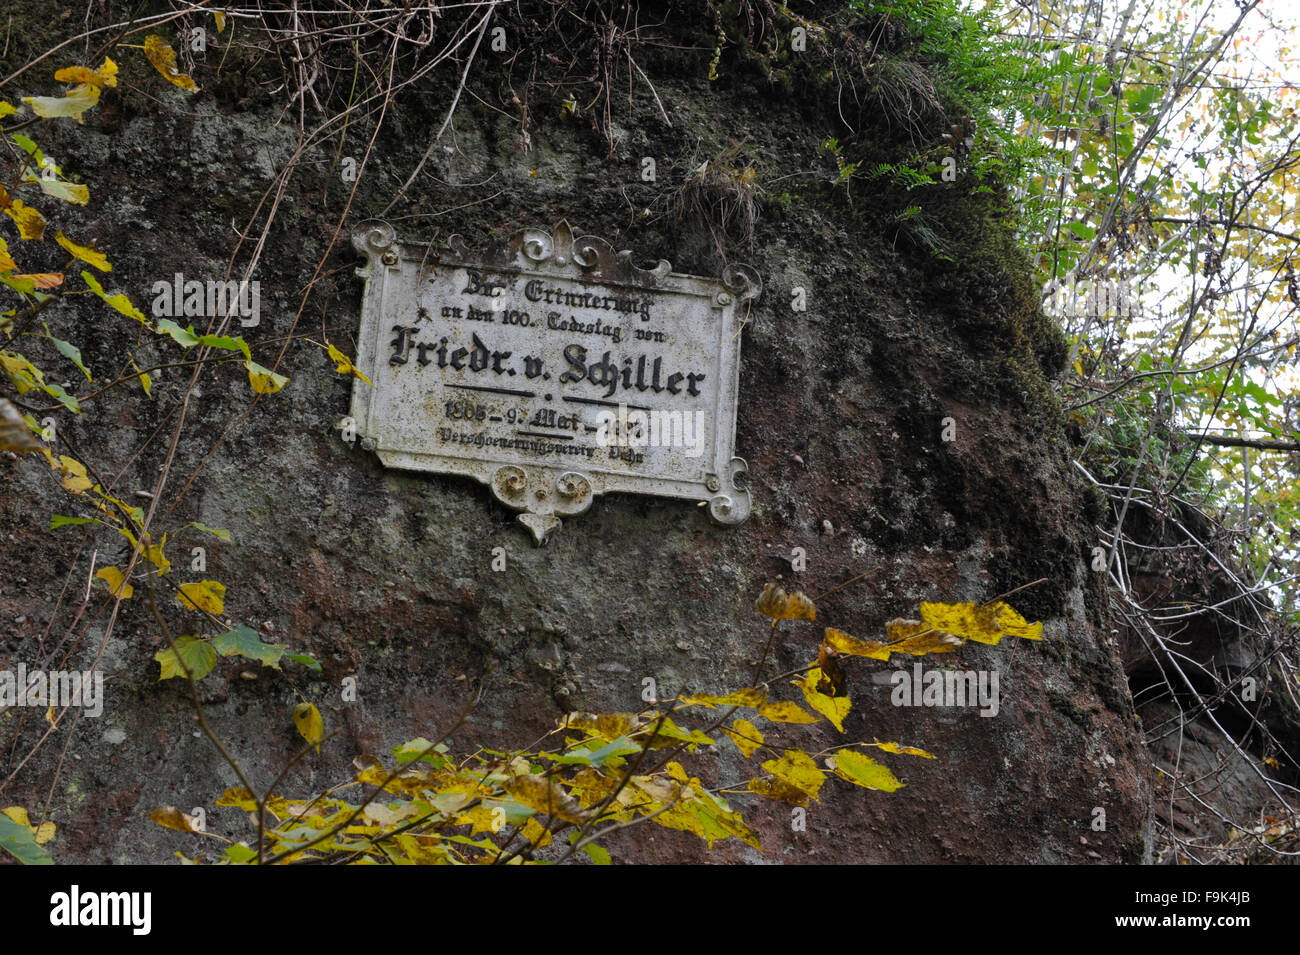 Lapide per 100. anniversery della morte di Friedrich von Schiller a dahner felsenland (dahn rockland), dahn, südwestp Foto Stock